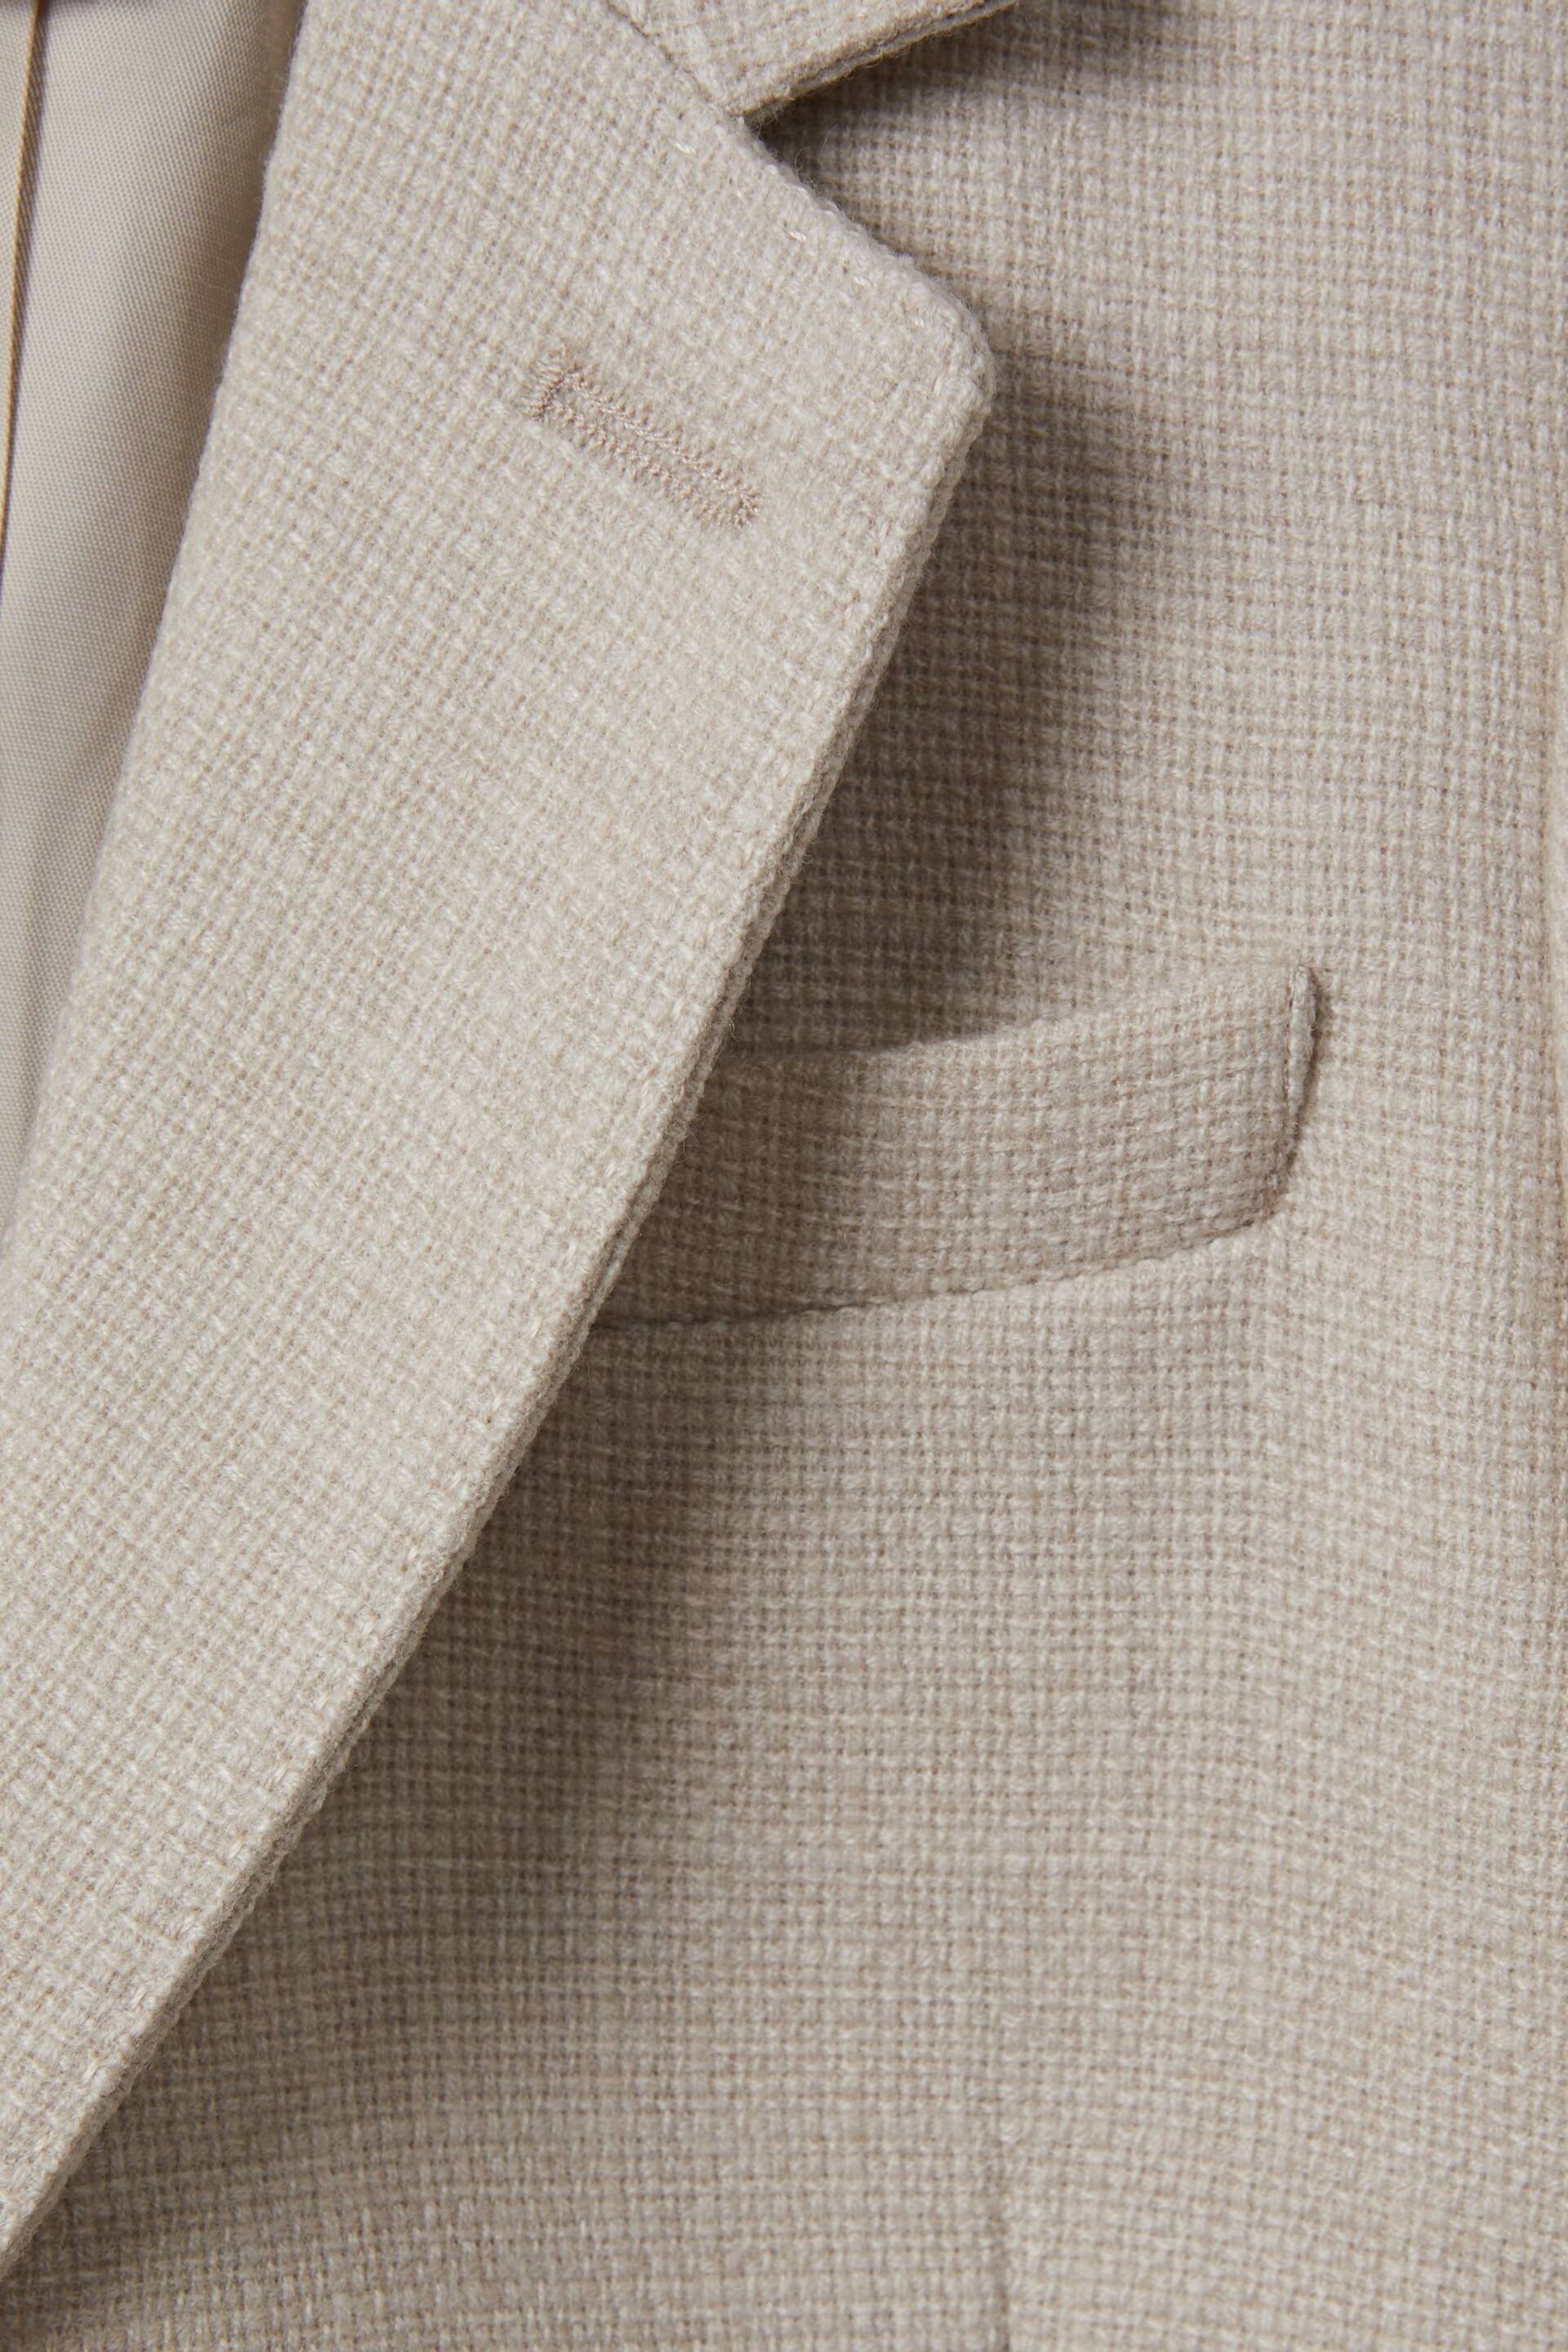 Reiss Stone Attire Senior Textured Wool Blend Single Breasted Blazer - Image 4 of 4